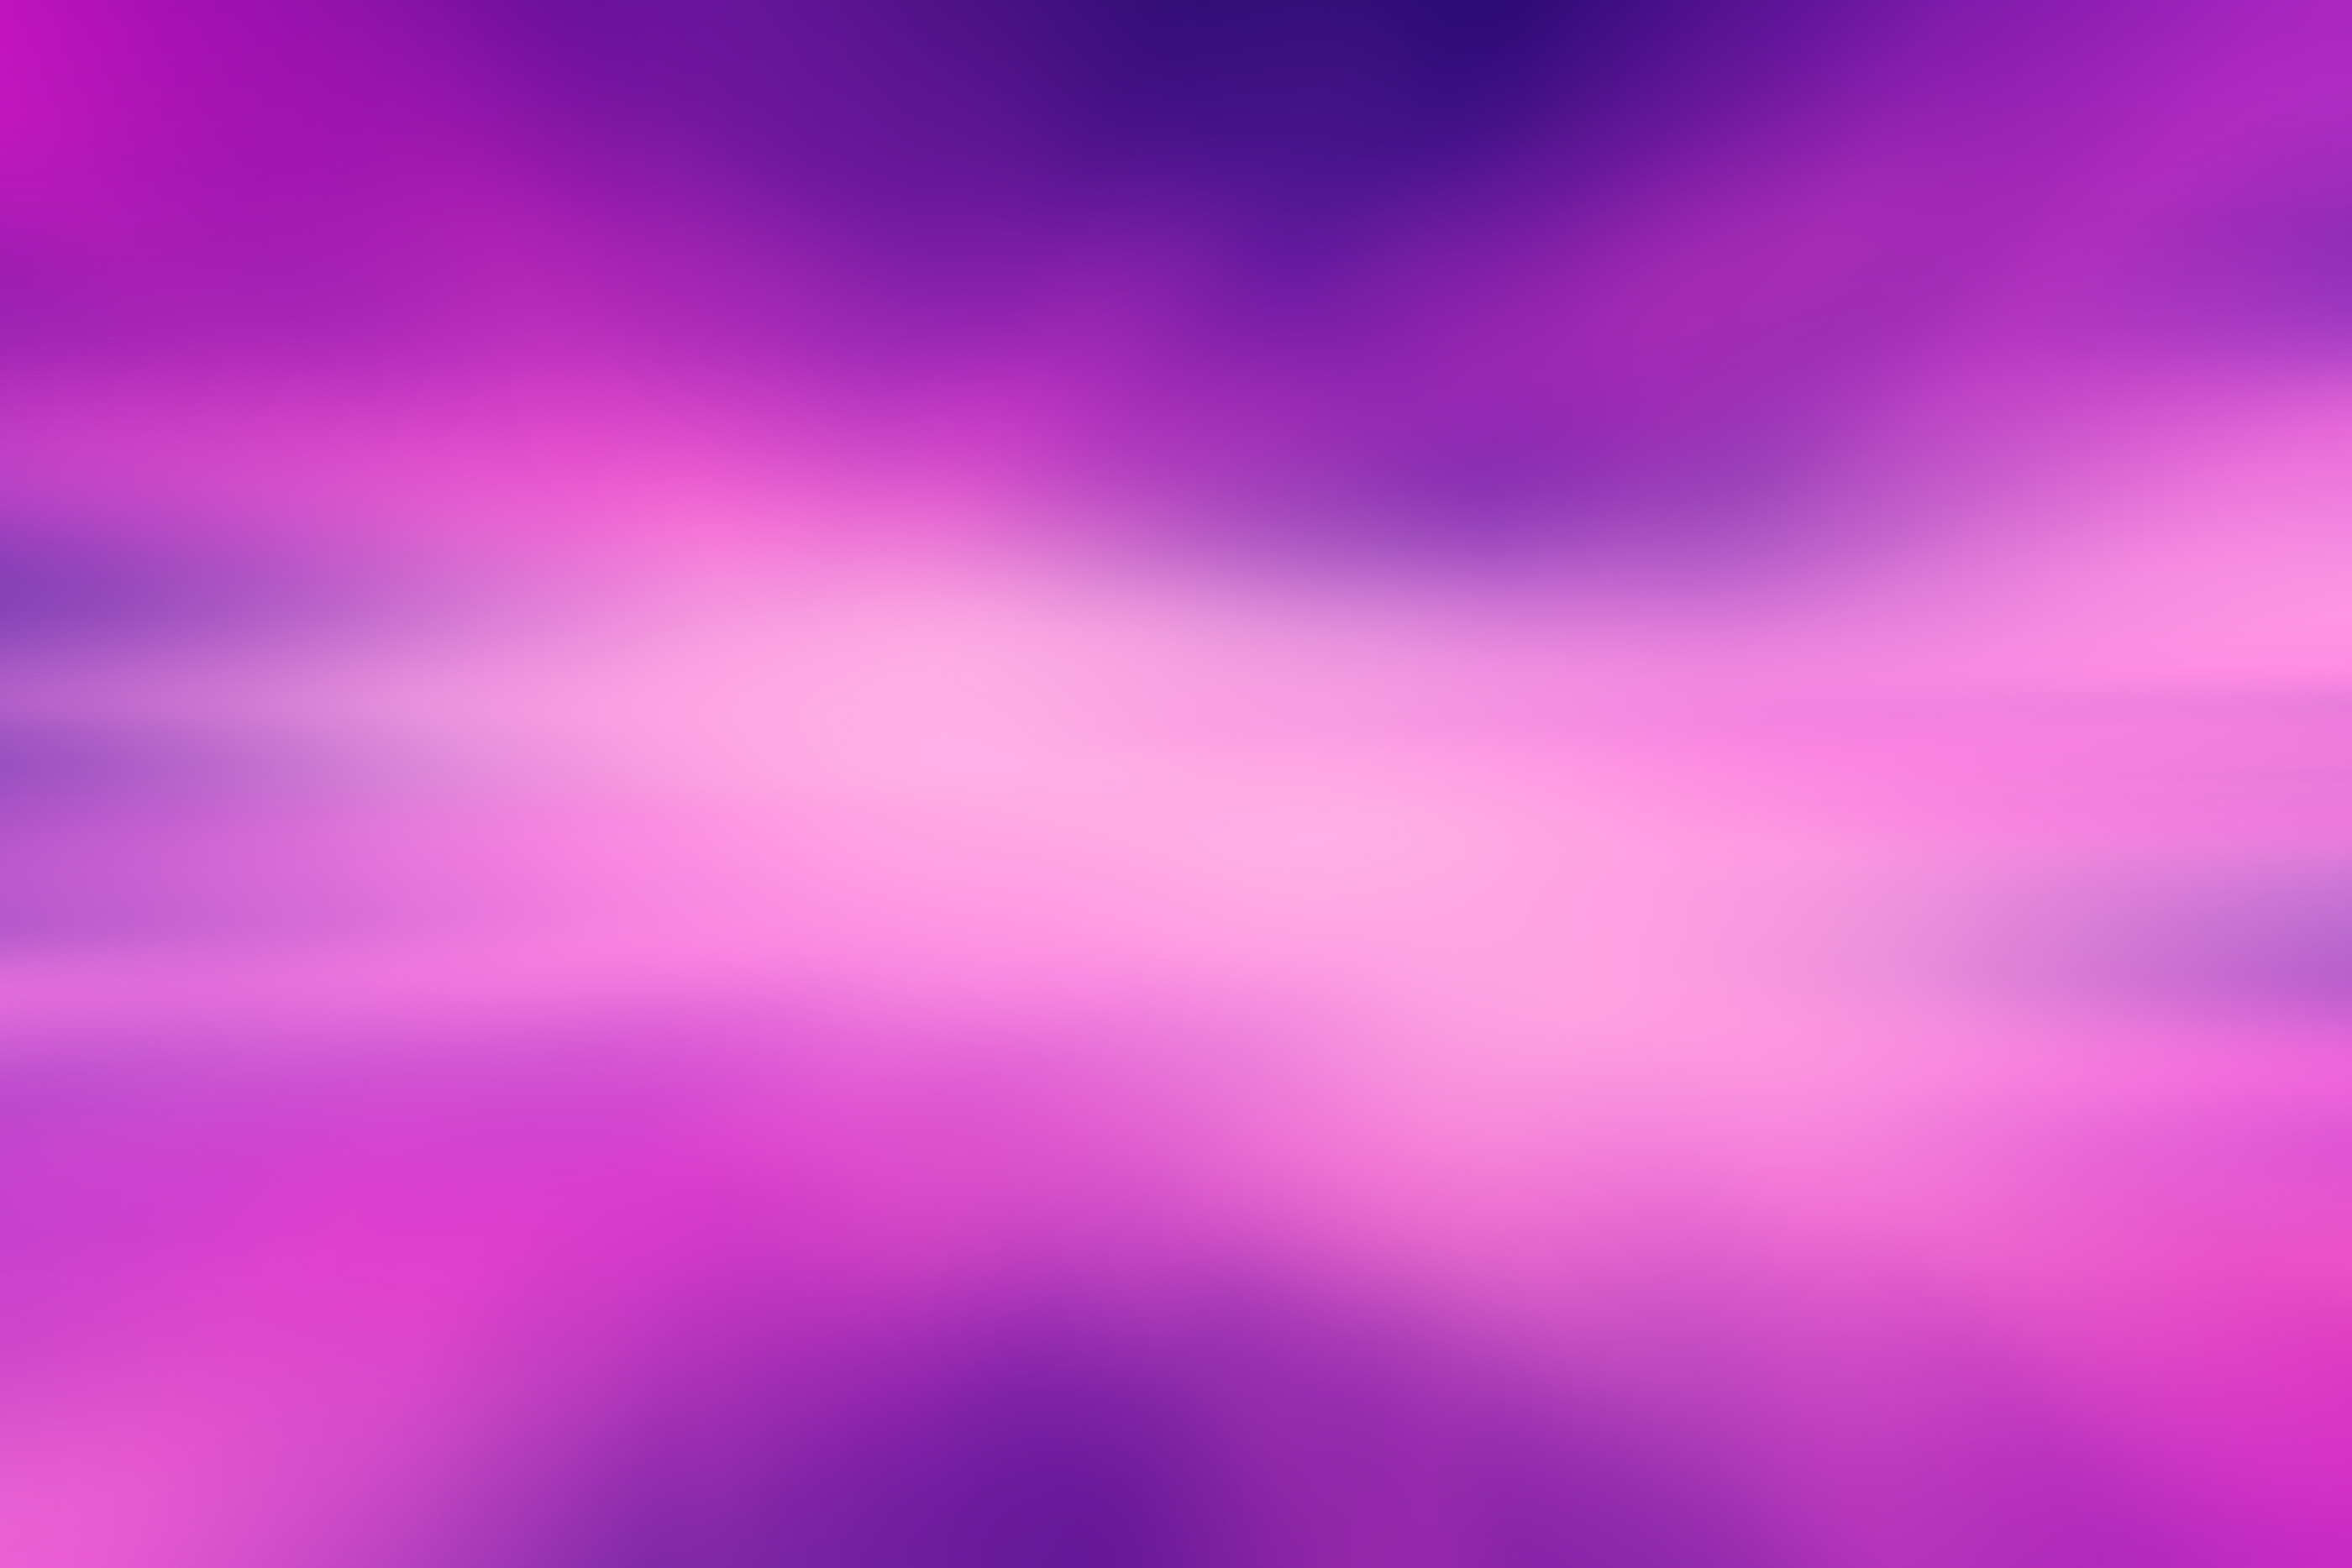 2800x1867 ... abstract web design, purple light texture background. Original size is  2800 Ã 1867 pixels